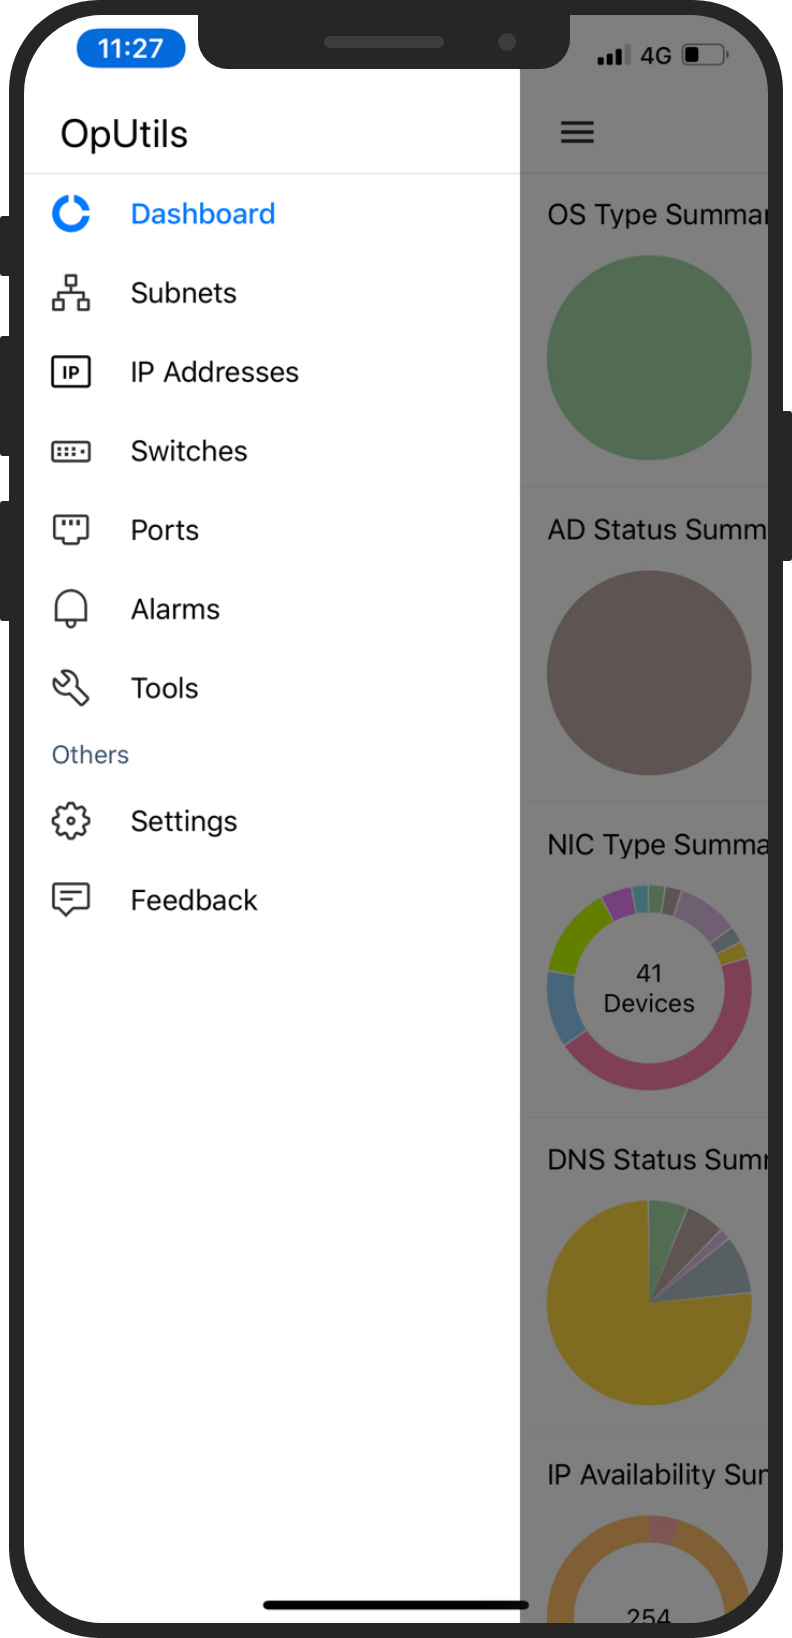 Vista móvil IOS de herramientas de OpUtils